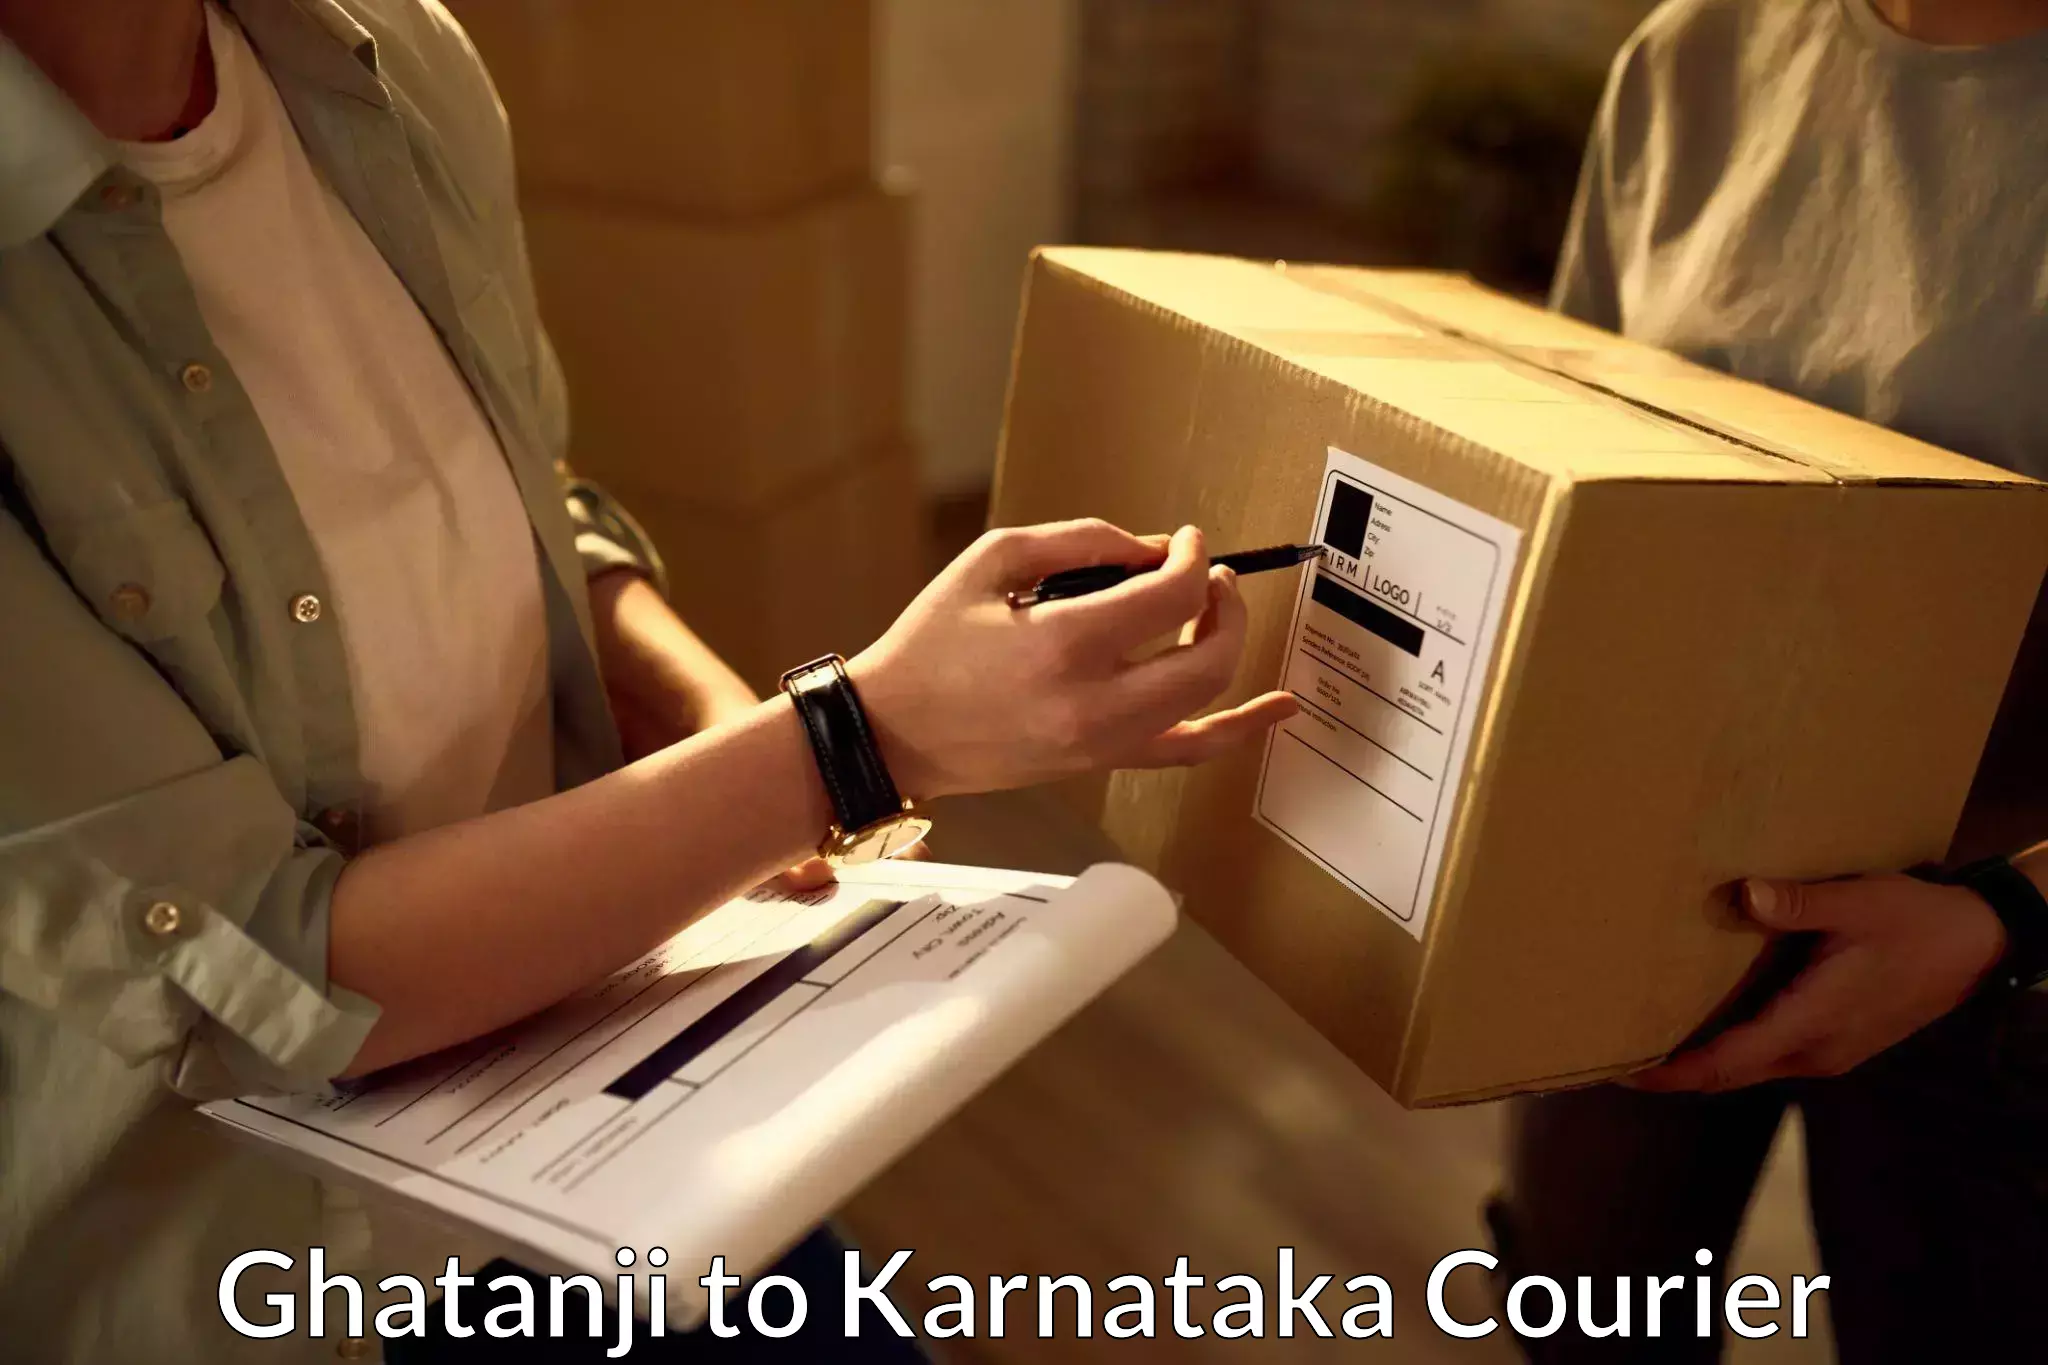 Courier service innovation Ghatanji to Karnataka